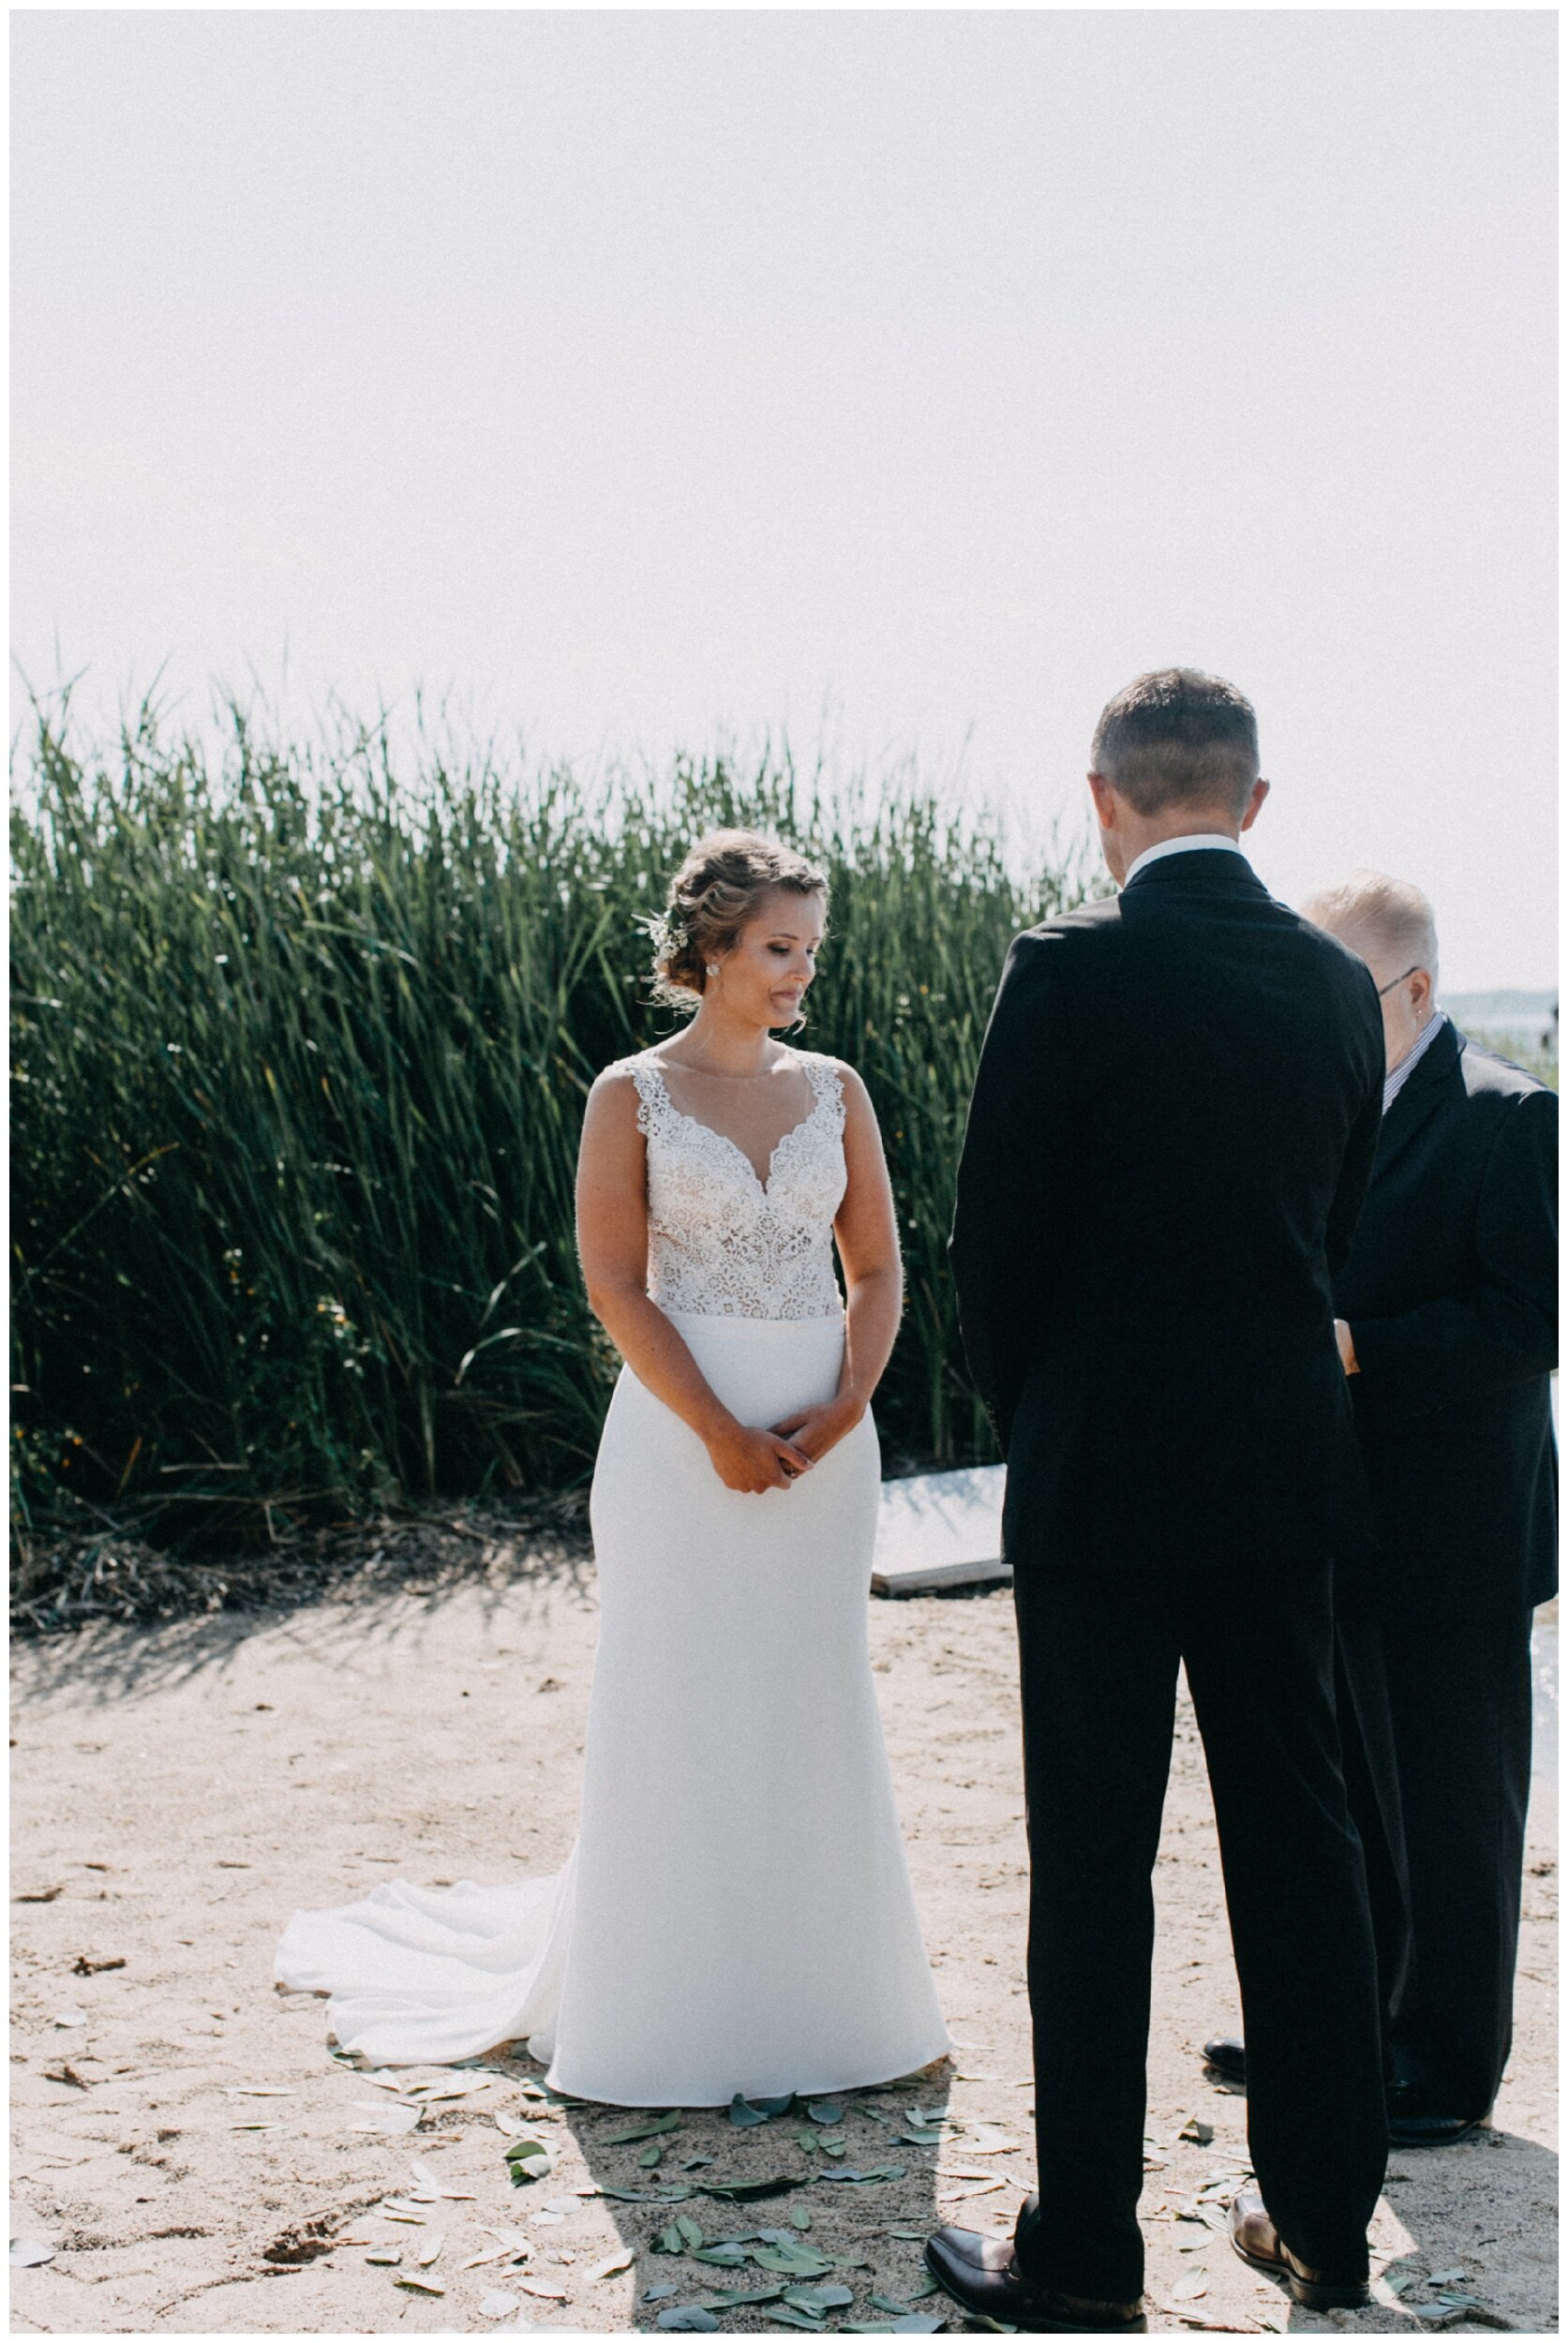 Bride and groom standing on sandy beach during lakeside wedding ceremony in Brainerd, Minnesota